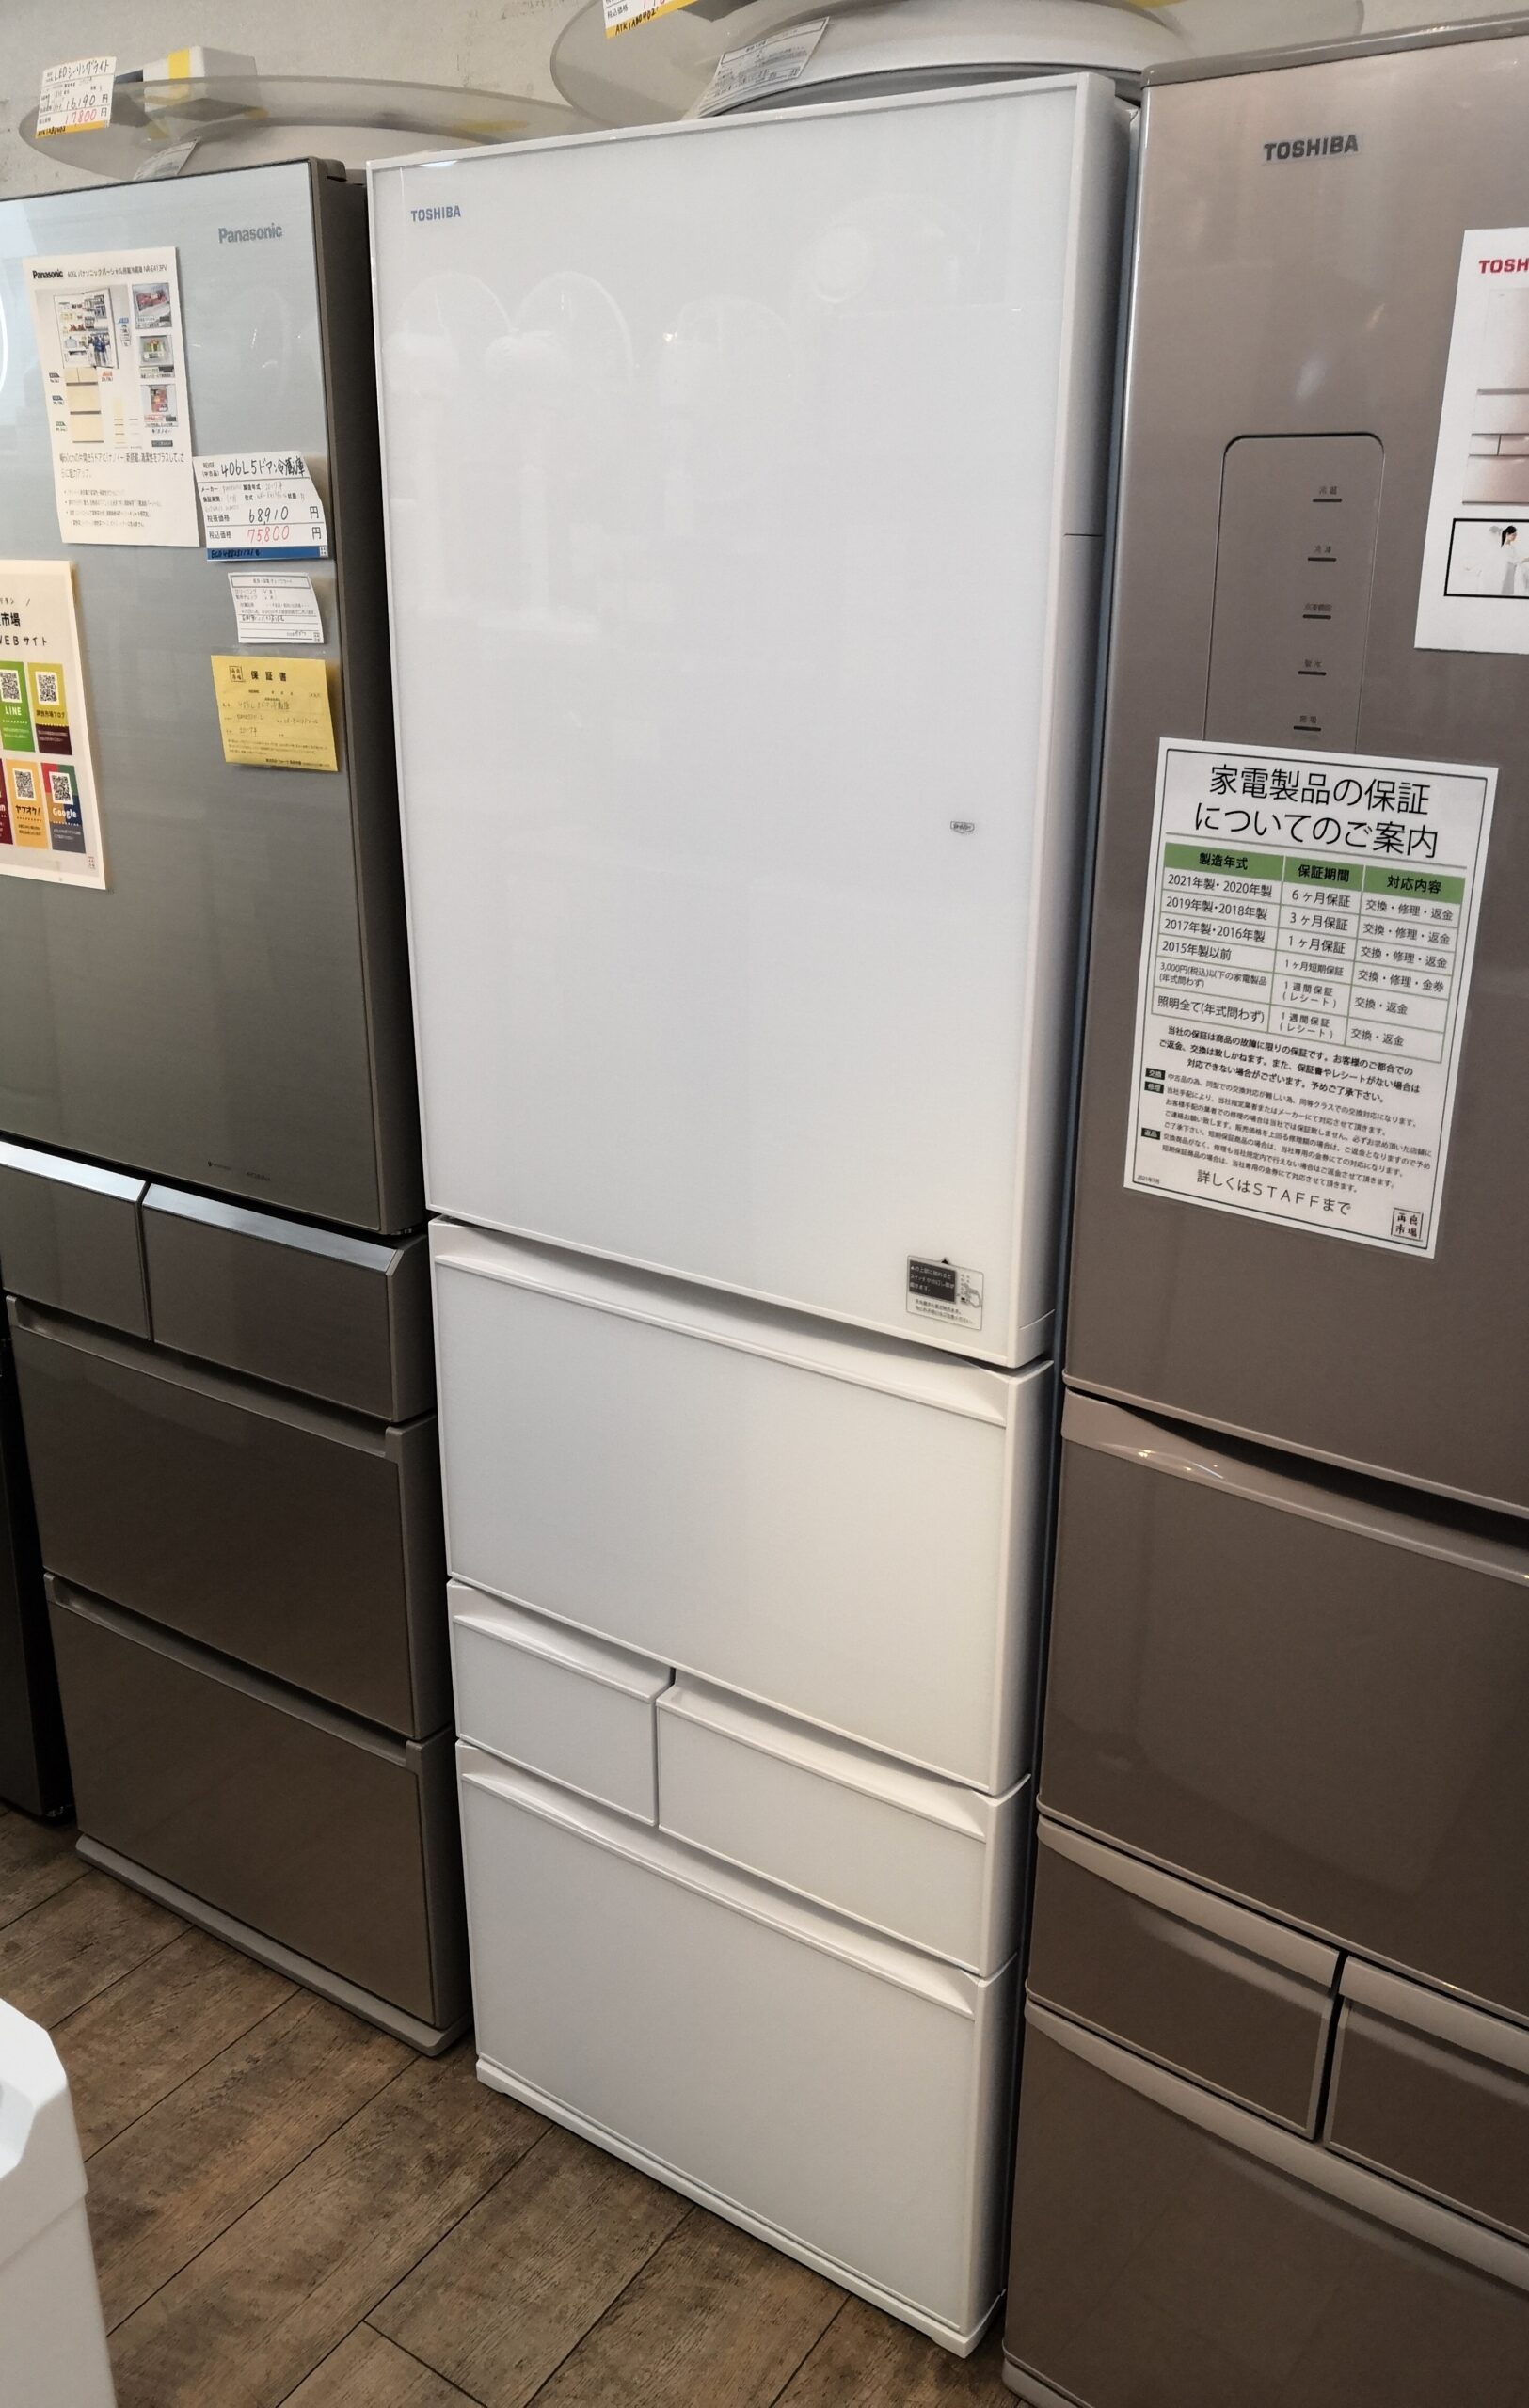 TOSHIBA ノンフロン冷凍冷蔵庫 - キッチン家電